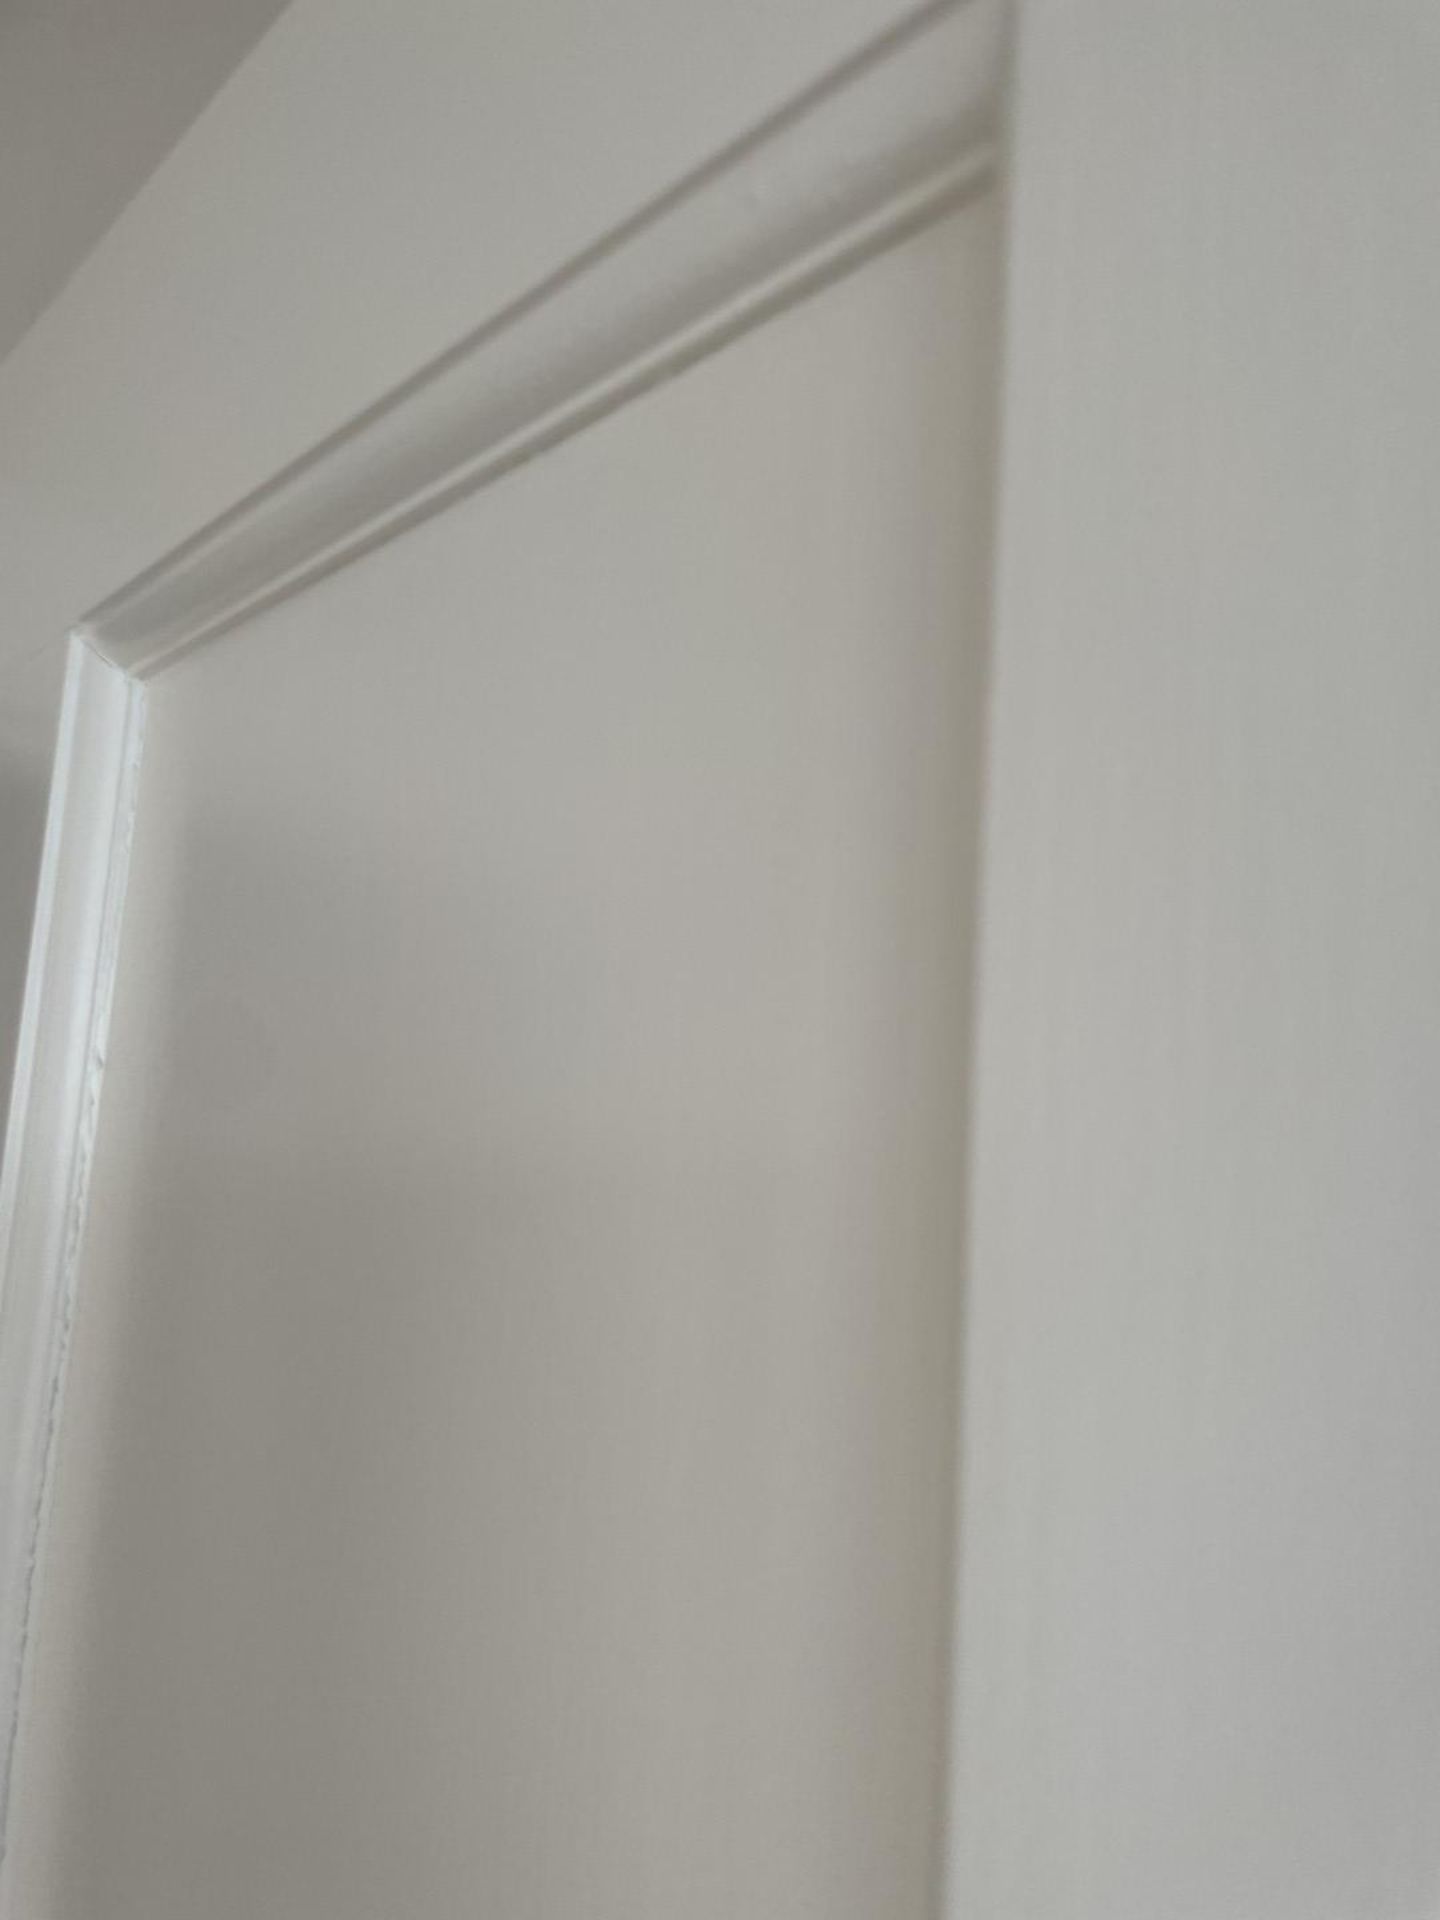 1 x Solid Wood Lockable Painted Internal Door in White - Image 7 of 11